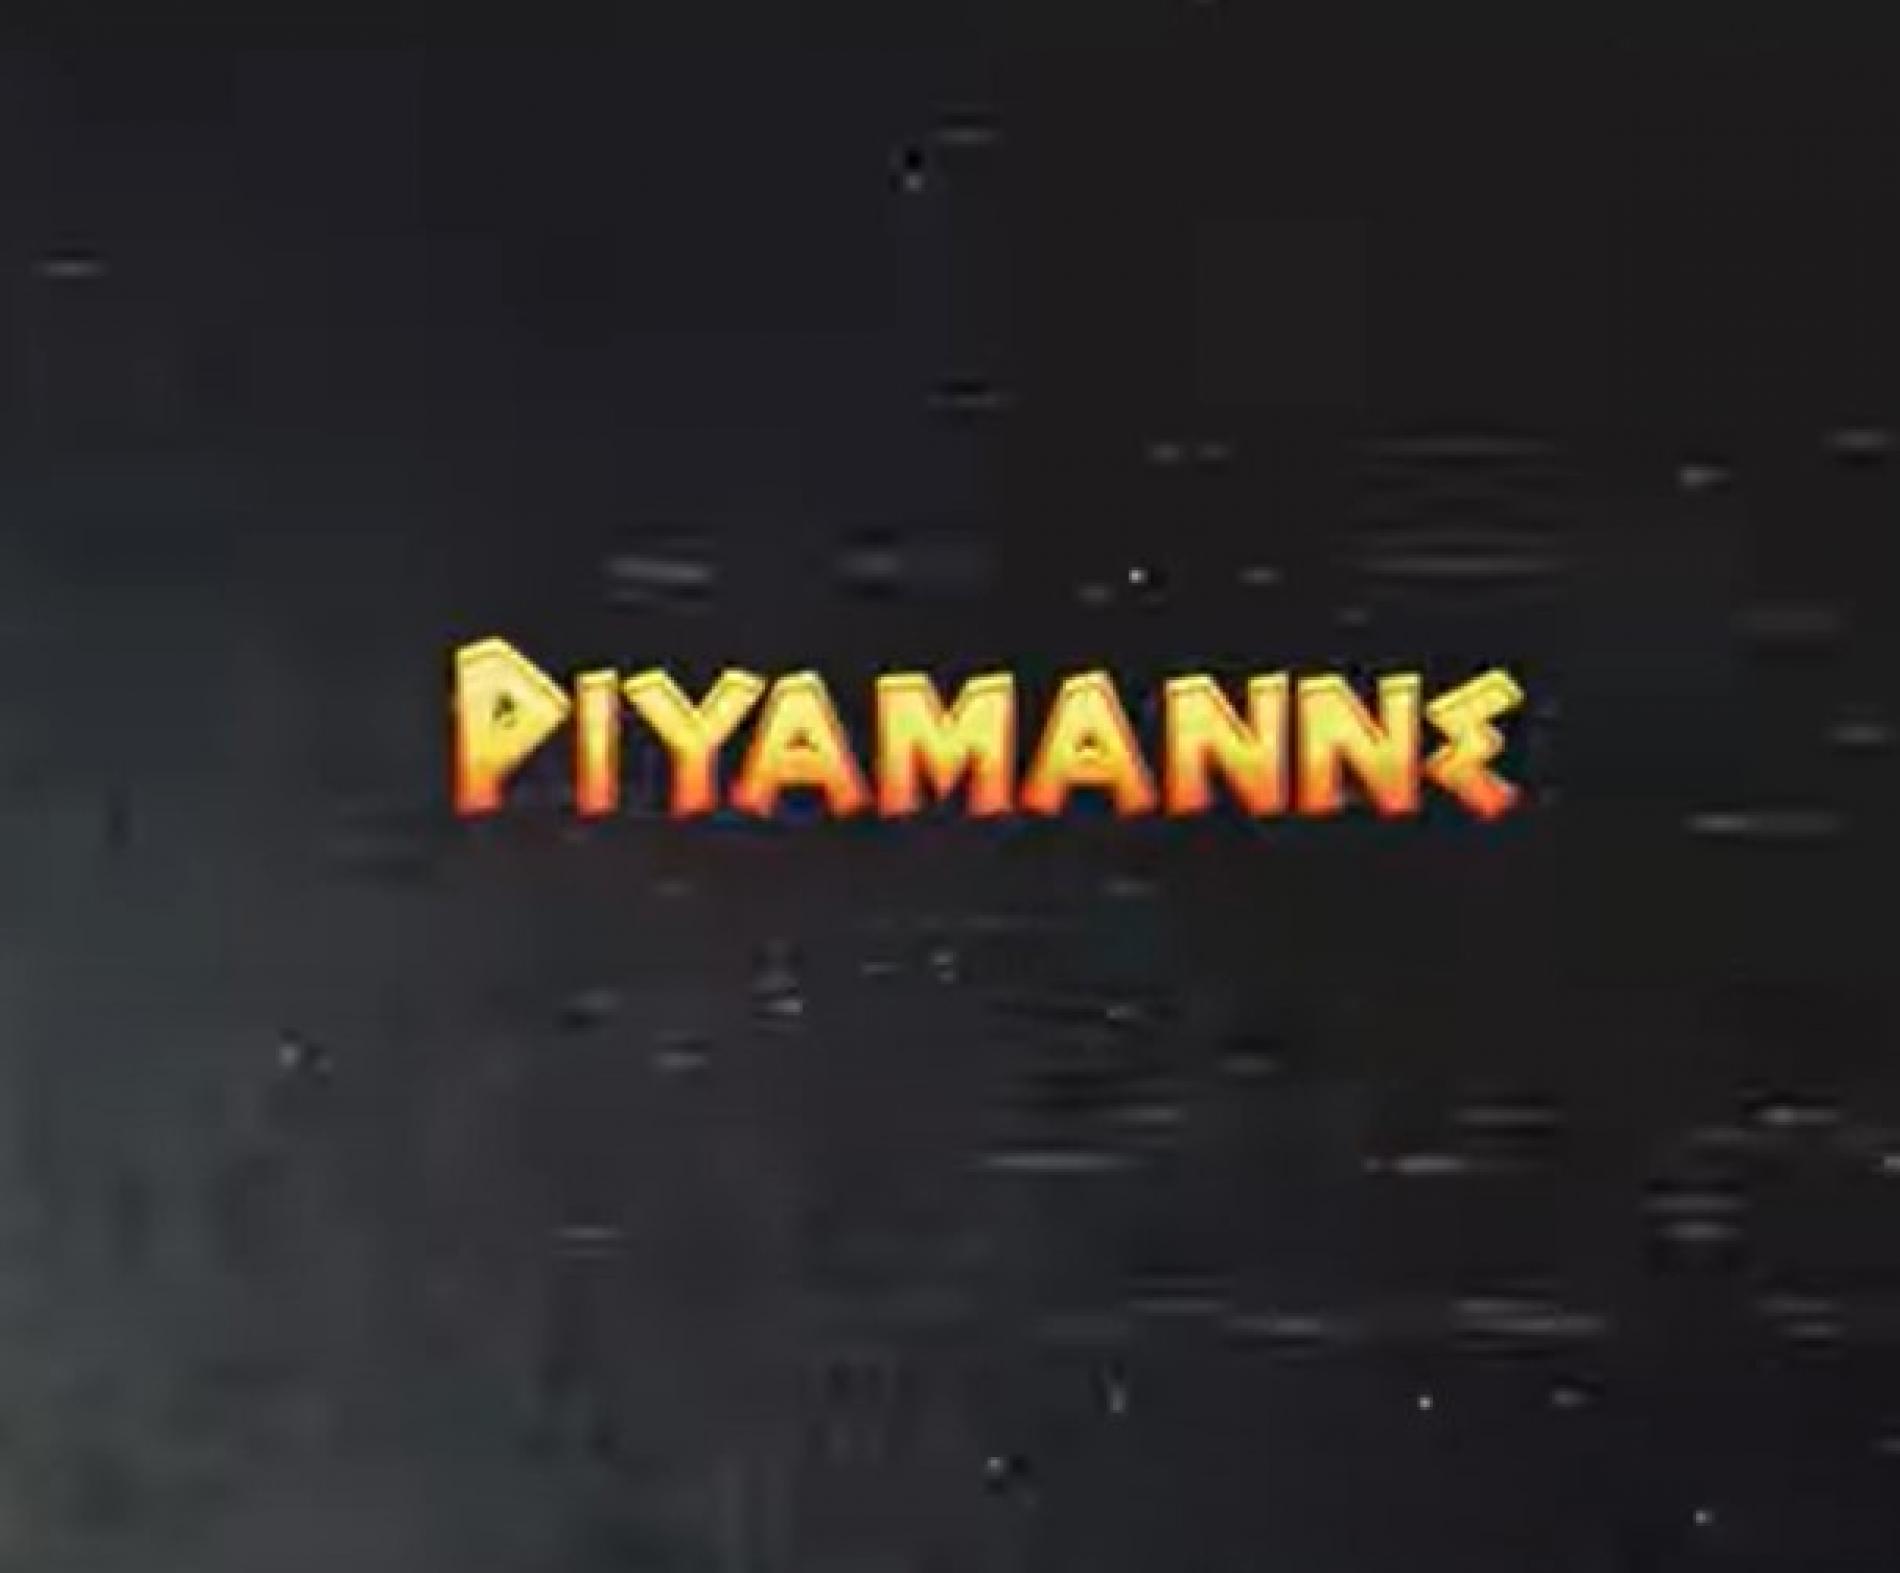 New Music : Piyamanne | පියමැන්නේ (Stereomiinds Remix) – Jaya Sri